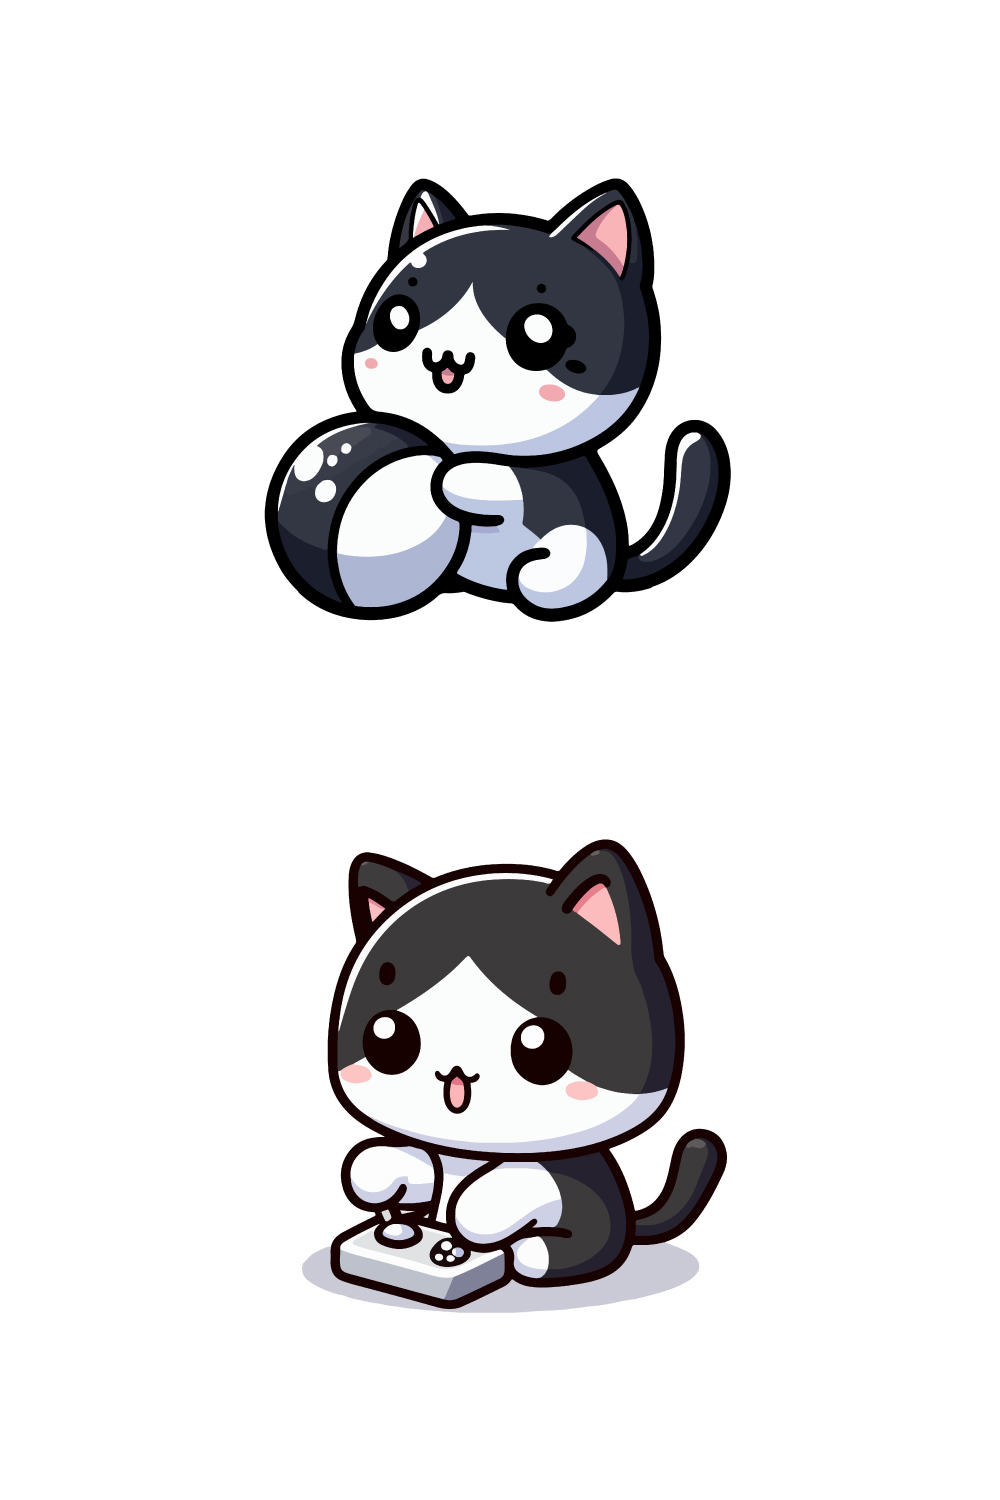 Cute kawaii cat character design vector illustration pinterest preview image.